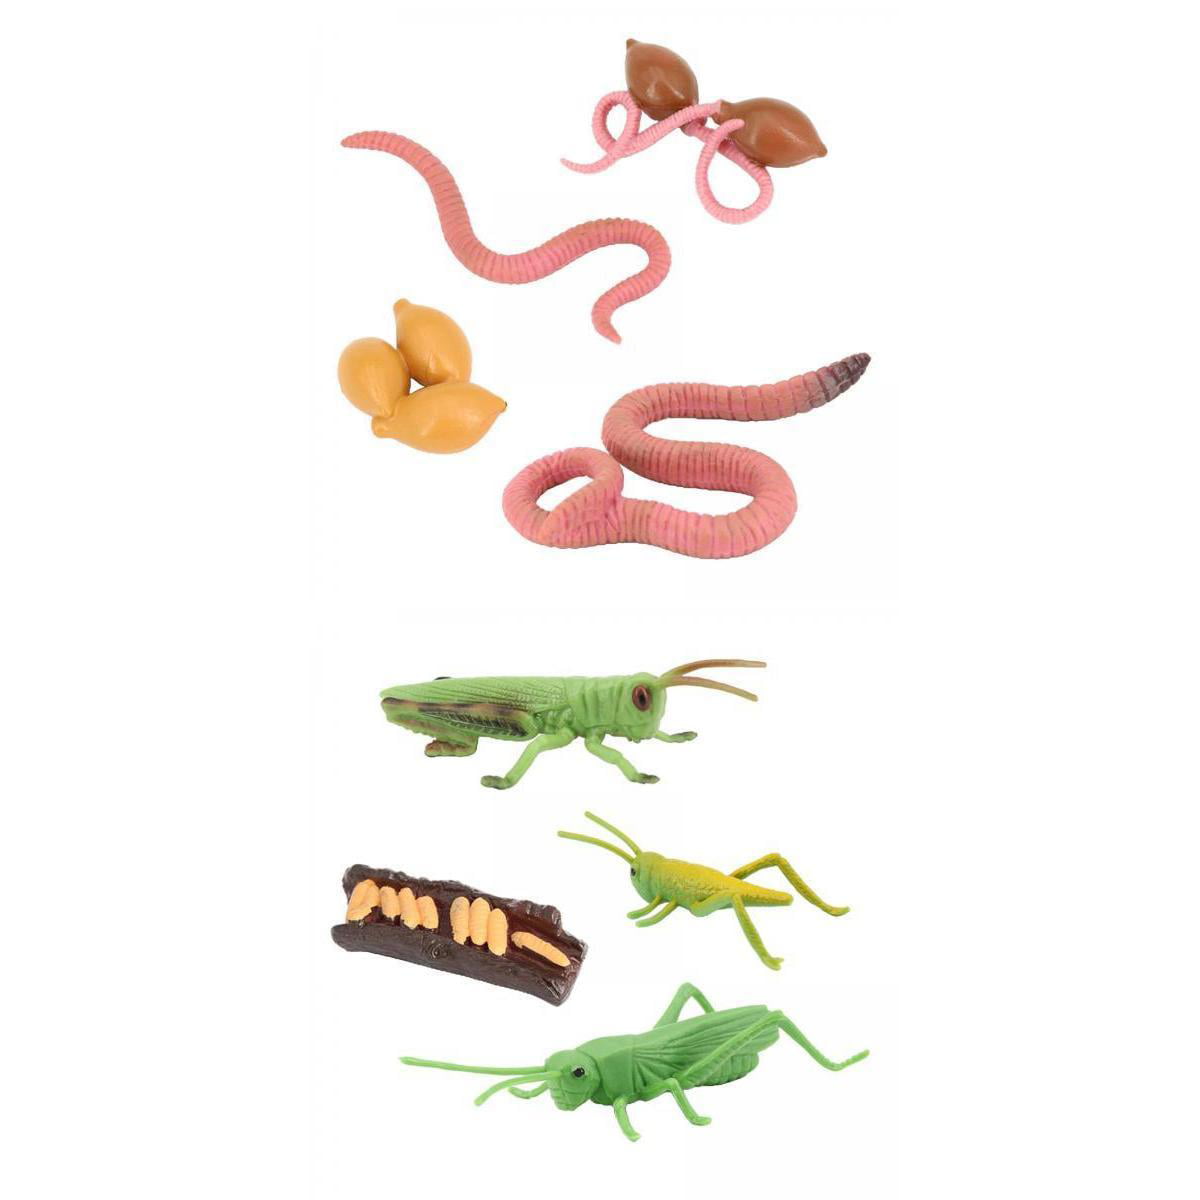 2 Set Cycle Animal Figure Model Toys 